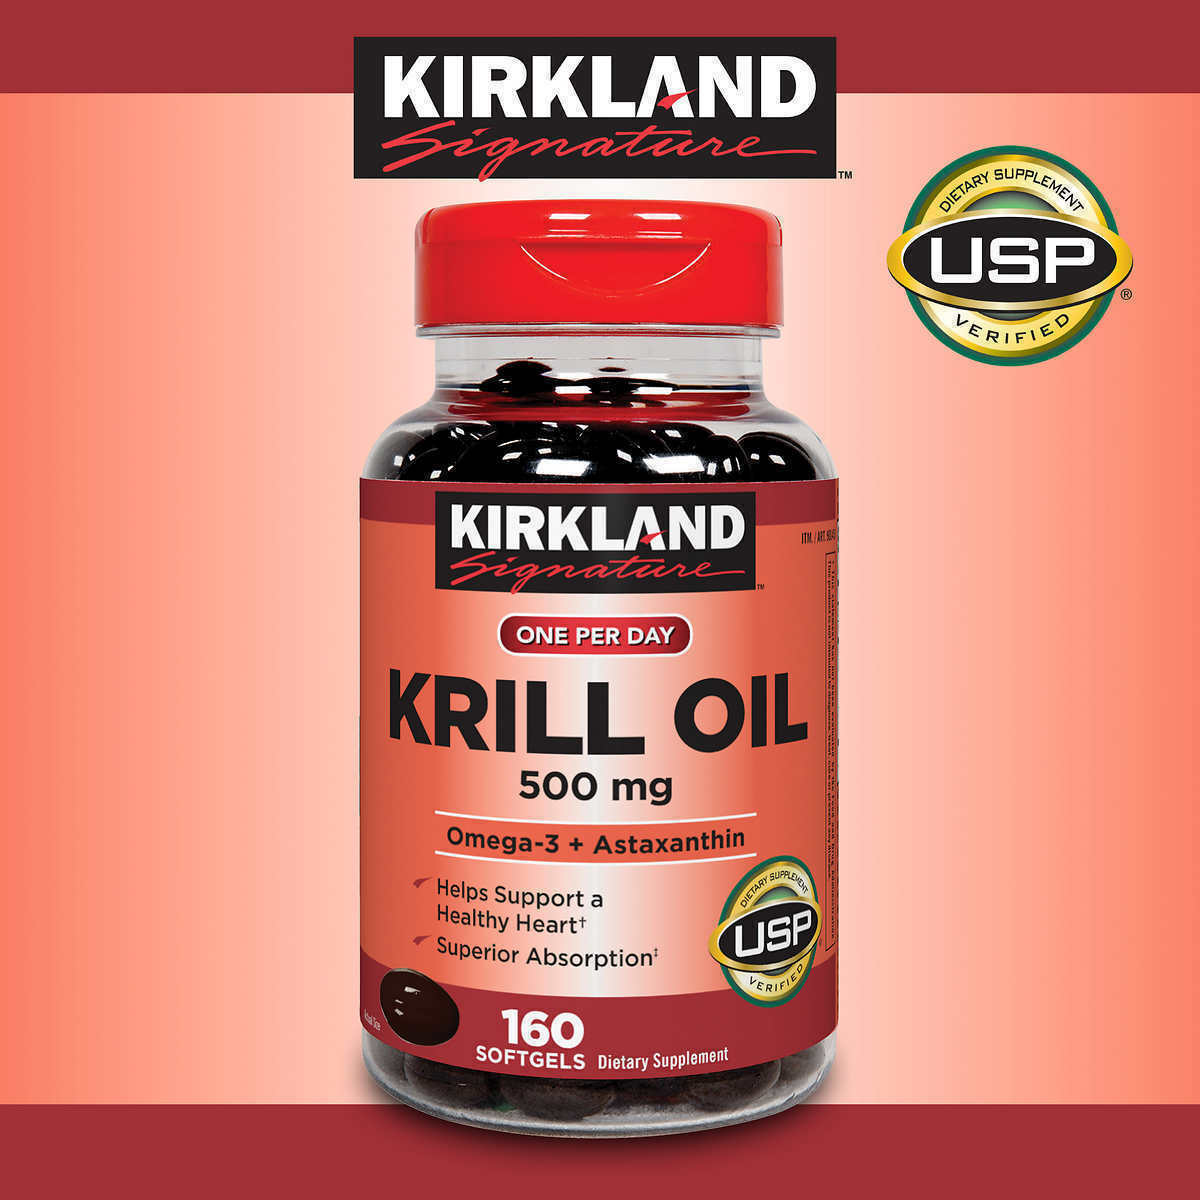 NEW Kirkland Signature Krill Oil 500 mg., 160 Softgels **FREE SHIPPING**